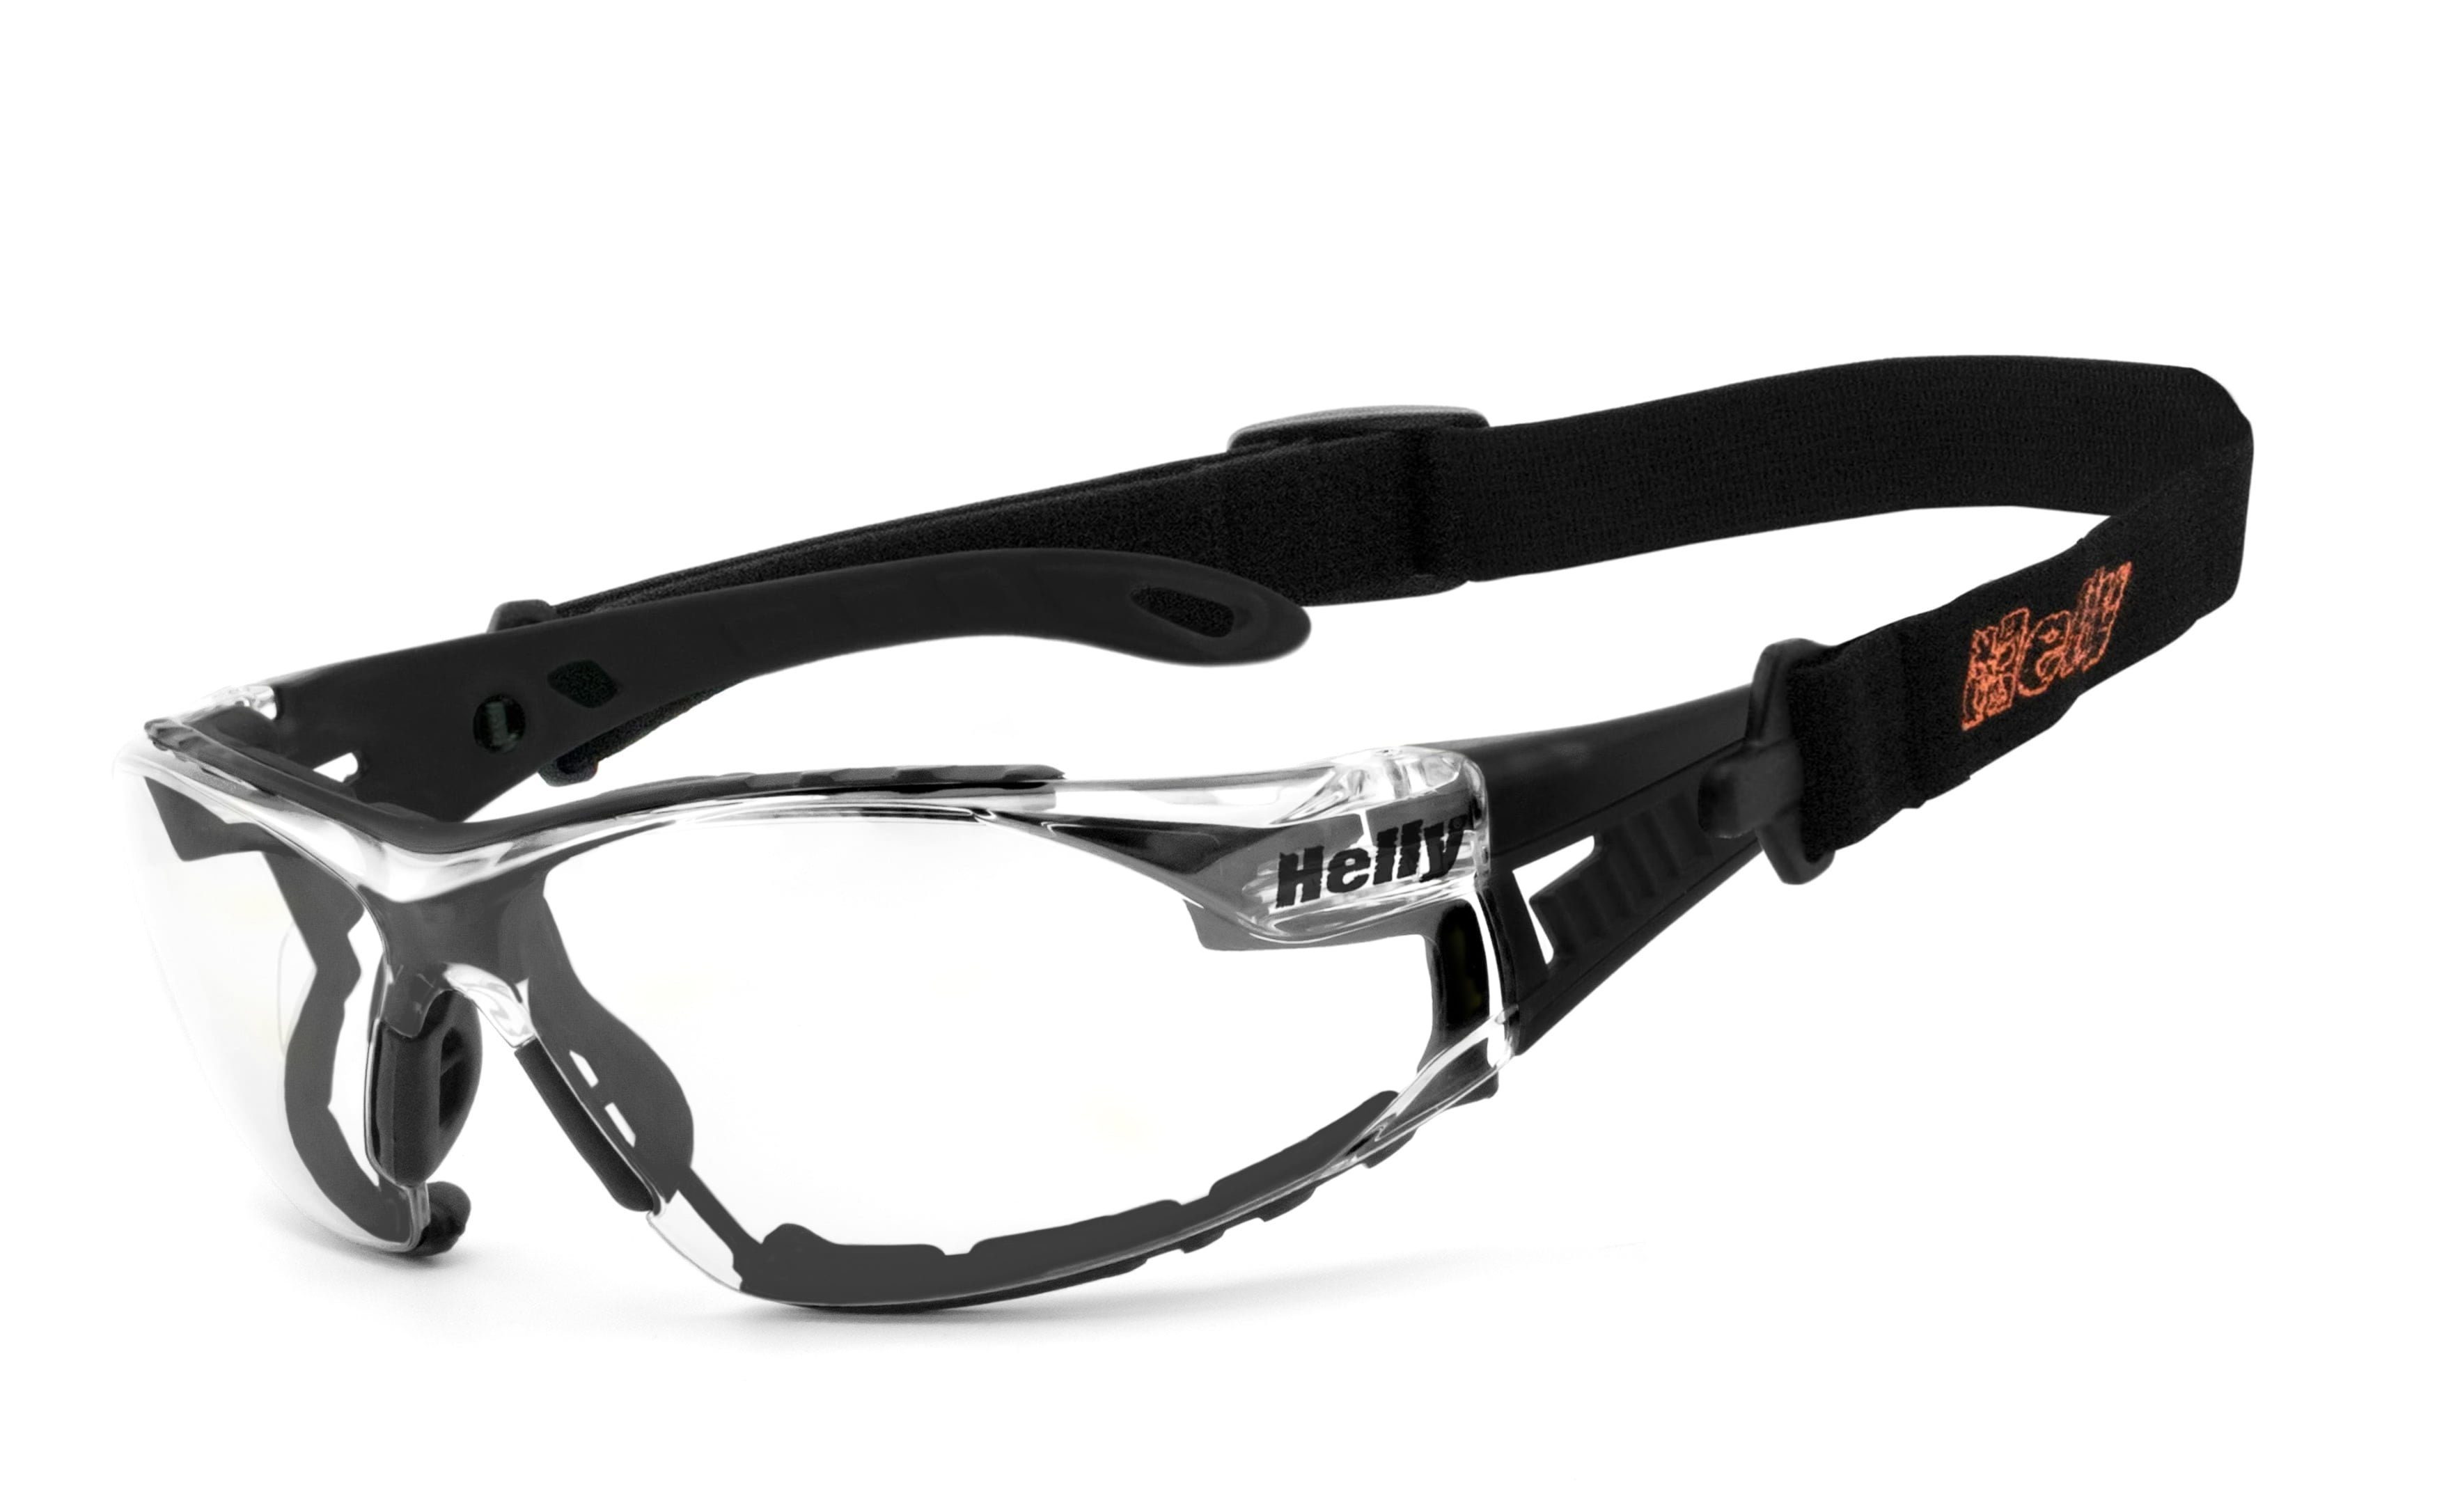 Helly - Bikereyes No.1 klar, super 5 flexible moab - Motorradbrille gepolstert, Brille